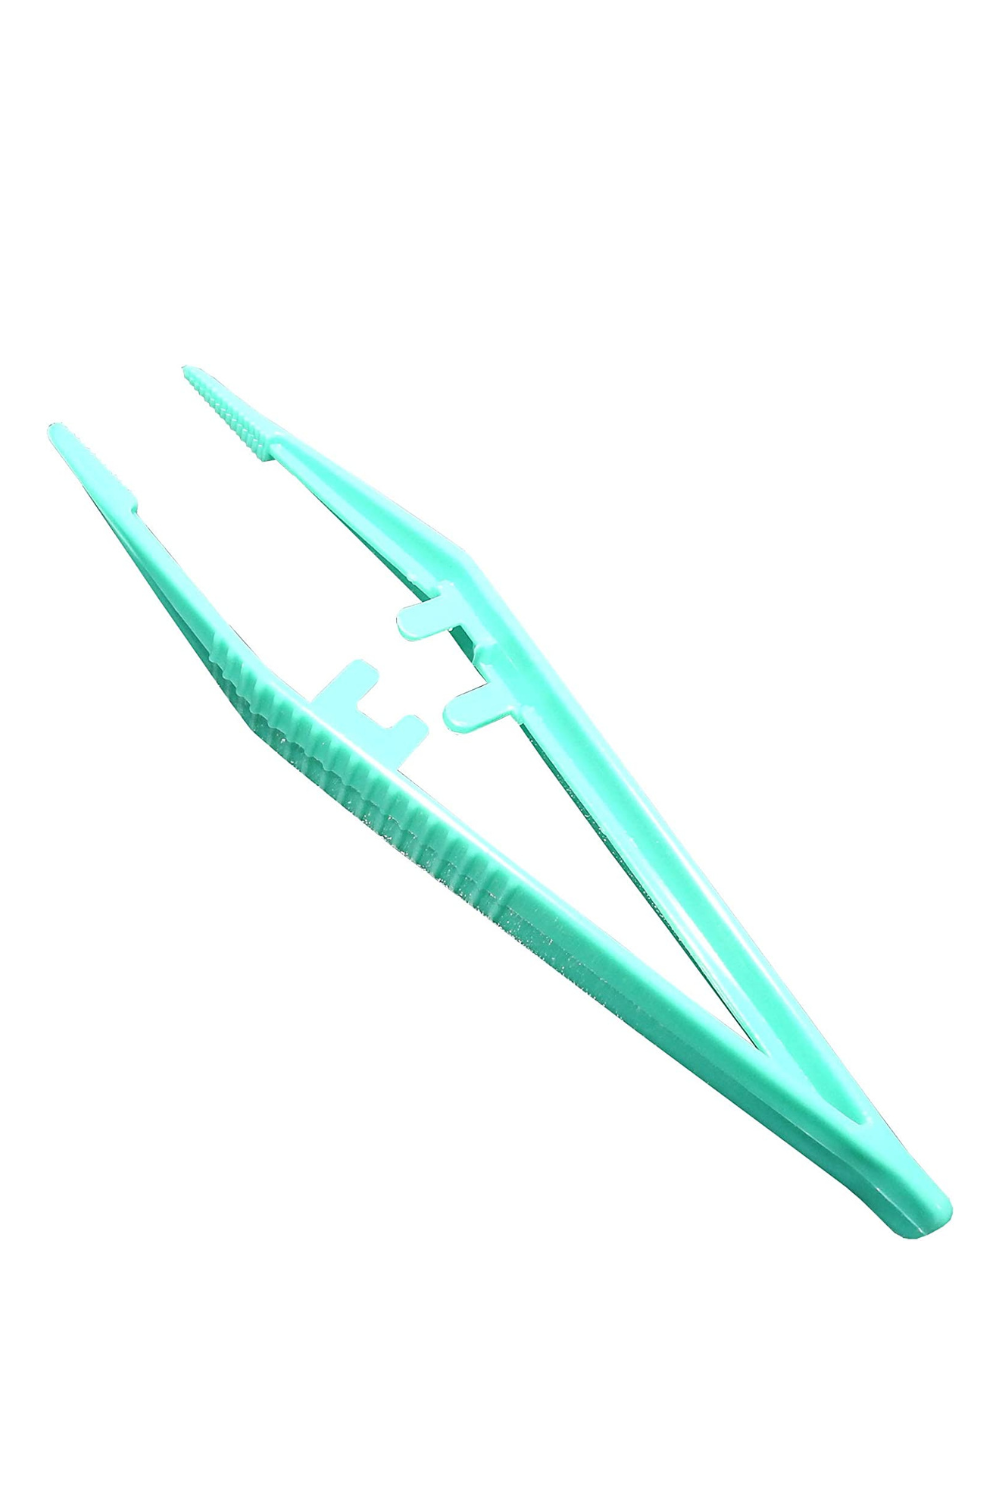 Disposable Non Sterile Plastic Forceps Tweezers, 12.5cm (Box of 12 packs of 25) (X0011XRI03)